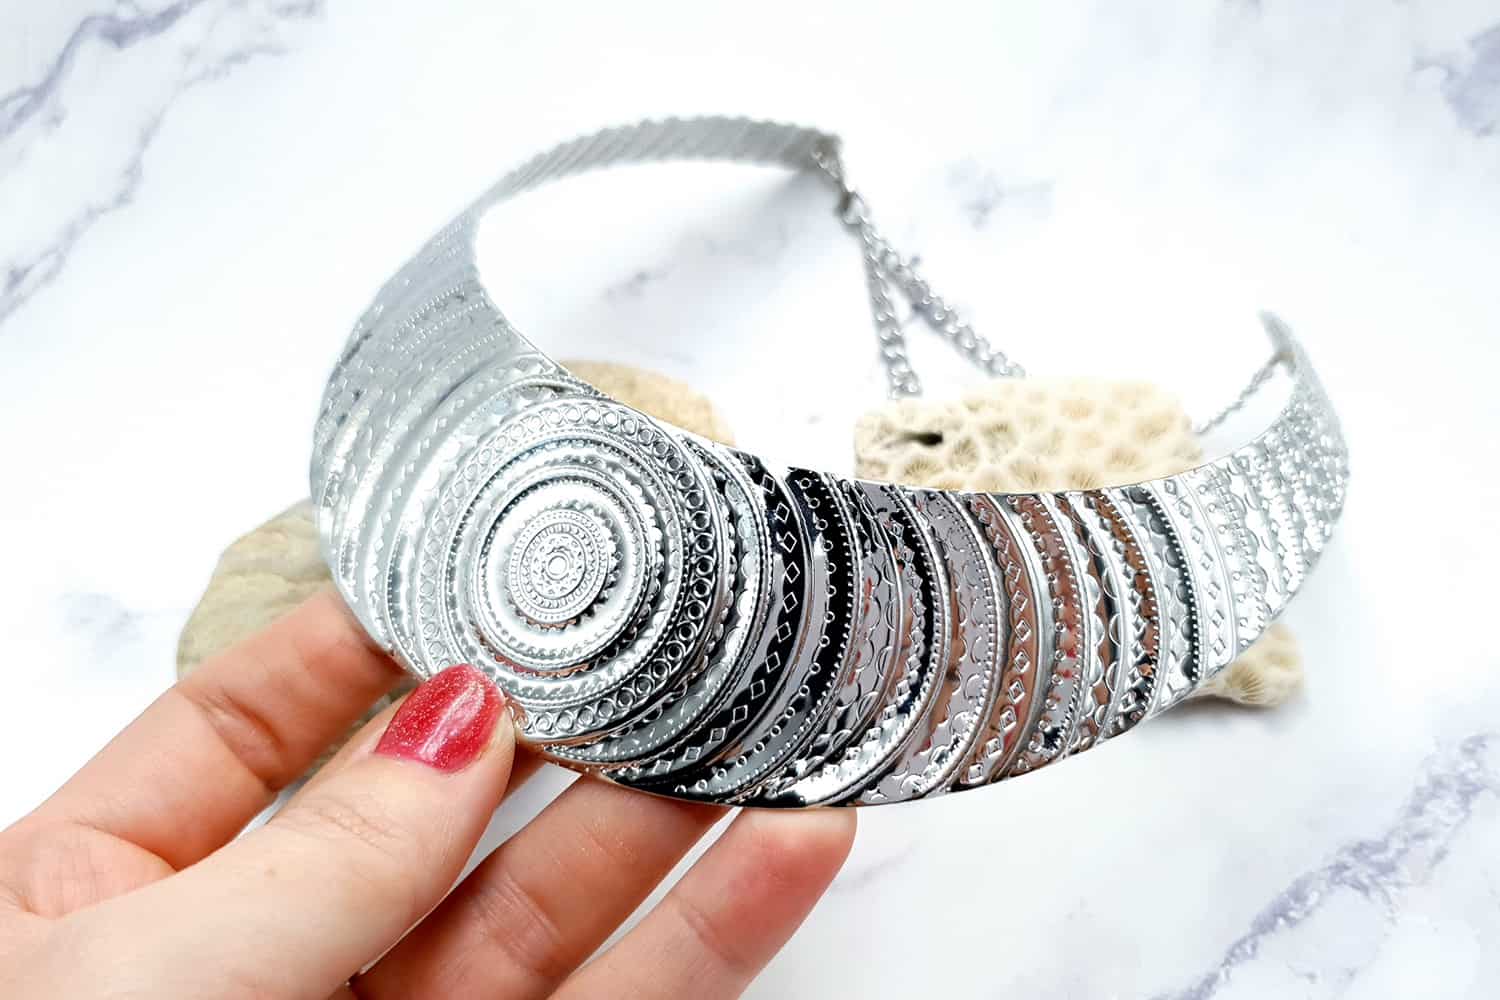 Necklace Metal Base “Circles” Pattern - Silver, 14cm (23371)